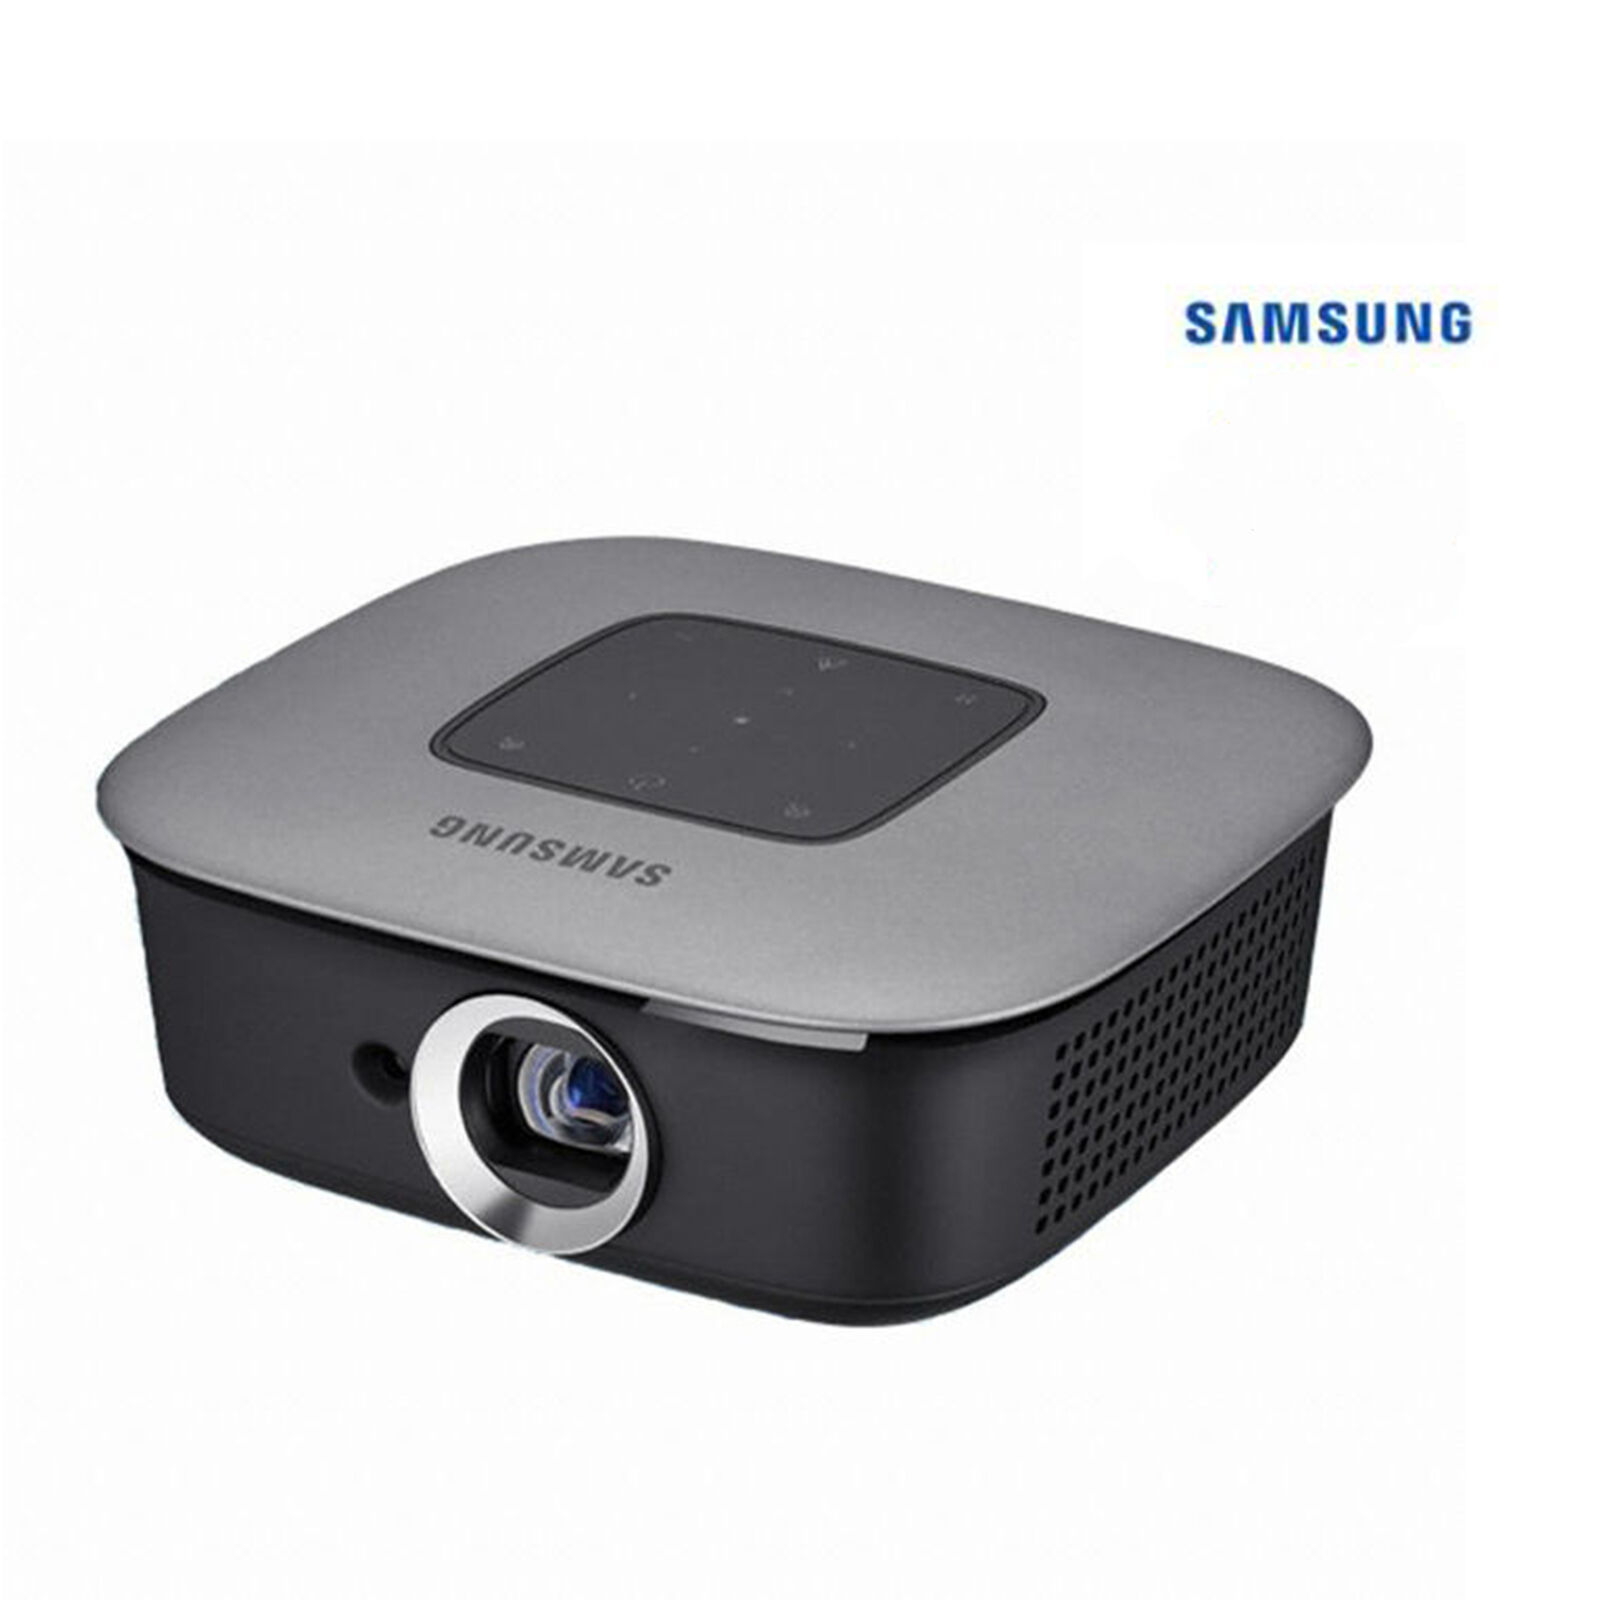 Samsung SSB-10DLYN60 HD 1280x720 Android 5.1 Portable Smart Beam DLP Projector